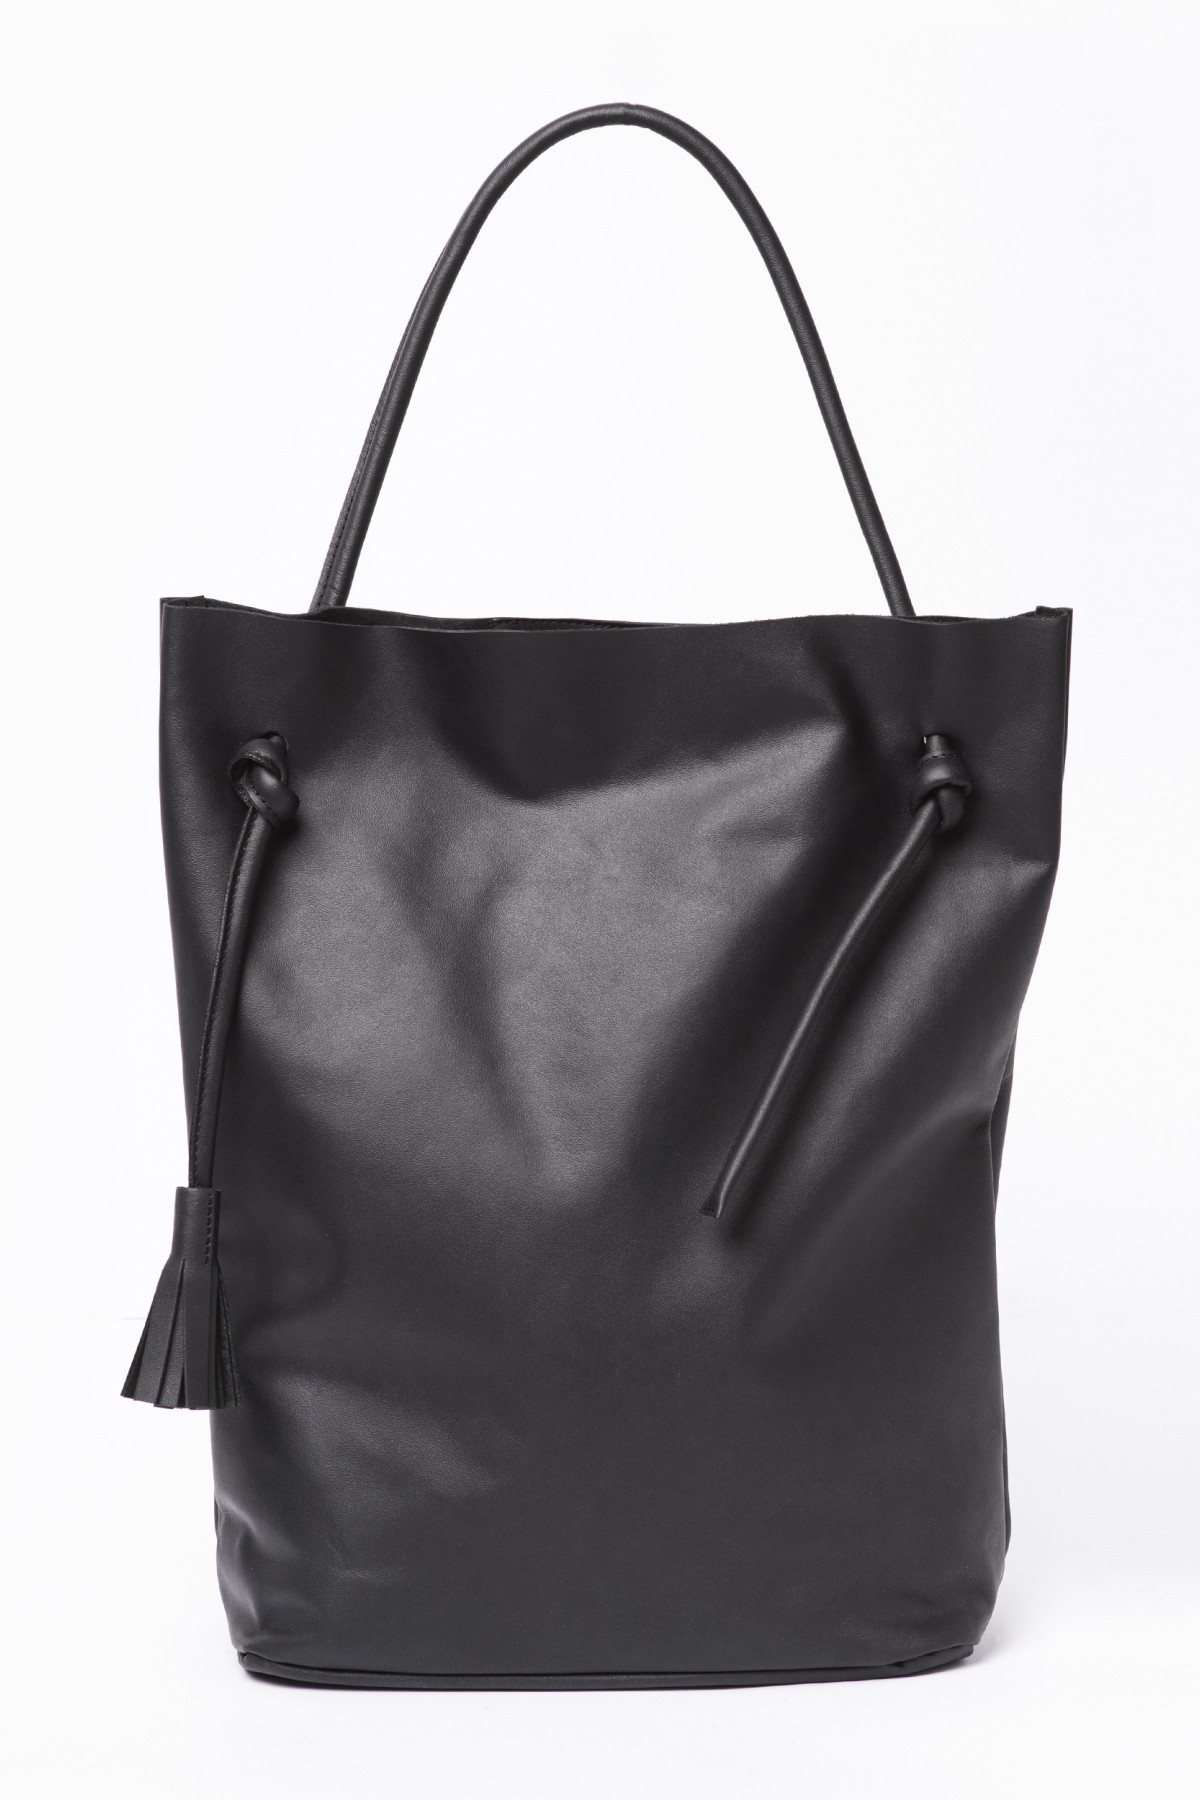 Look Made With Love Handbag 5552 Paris Look Black OS